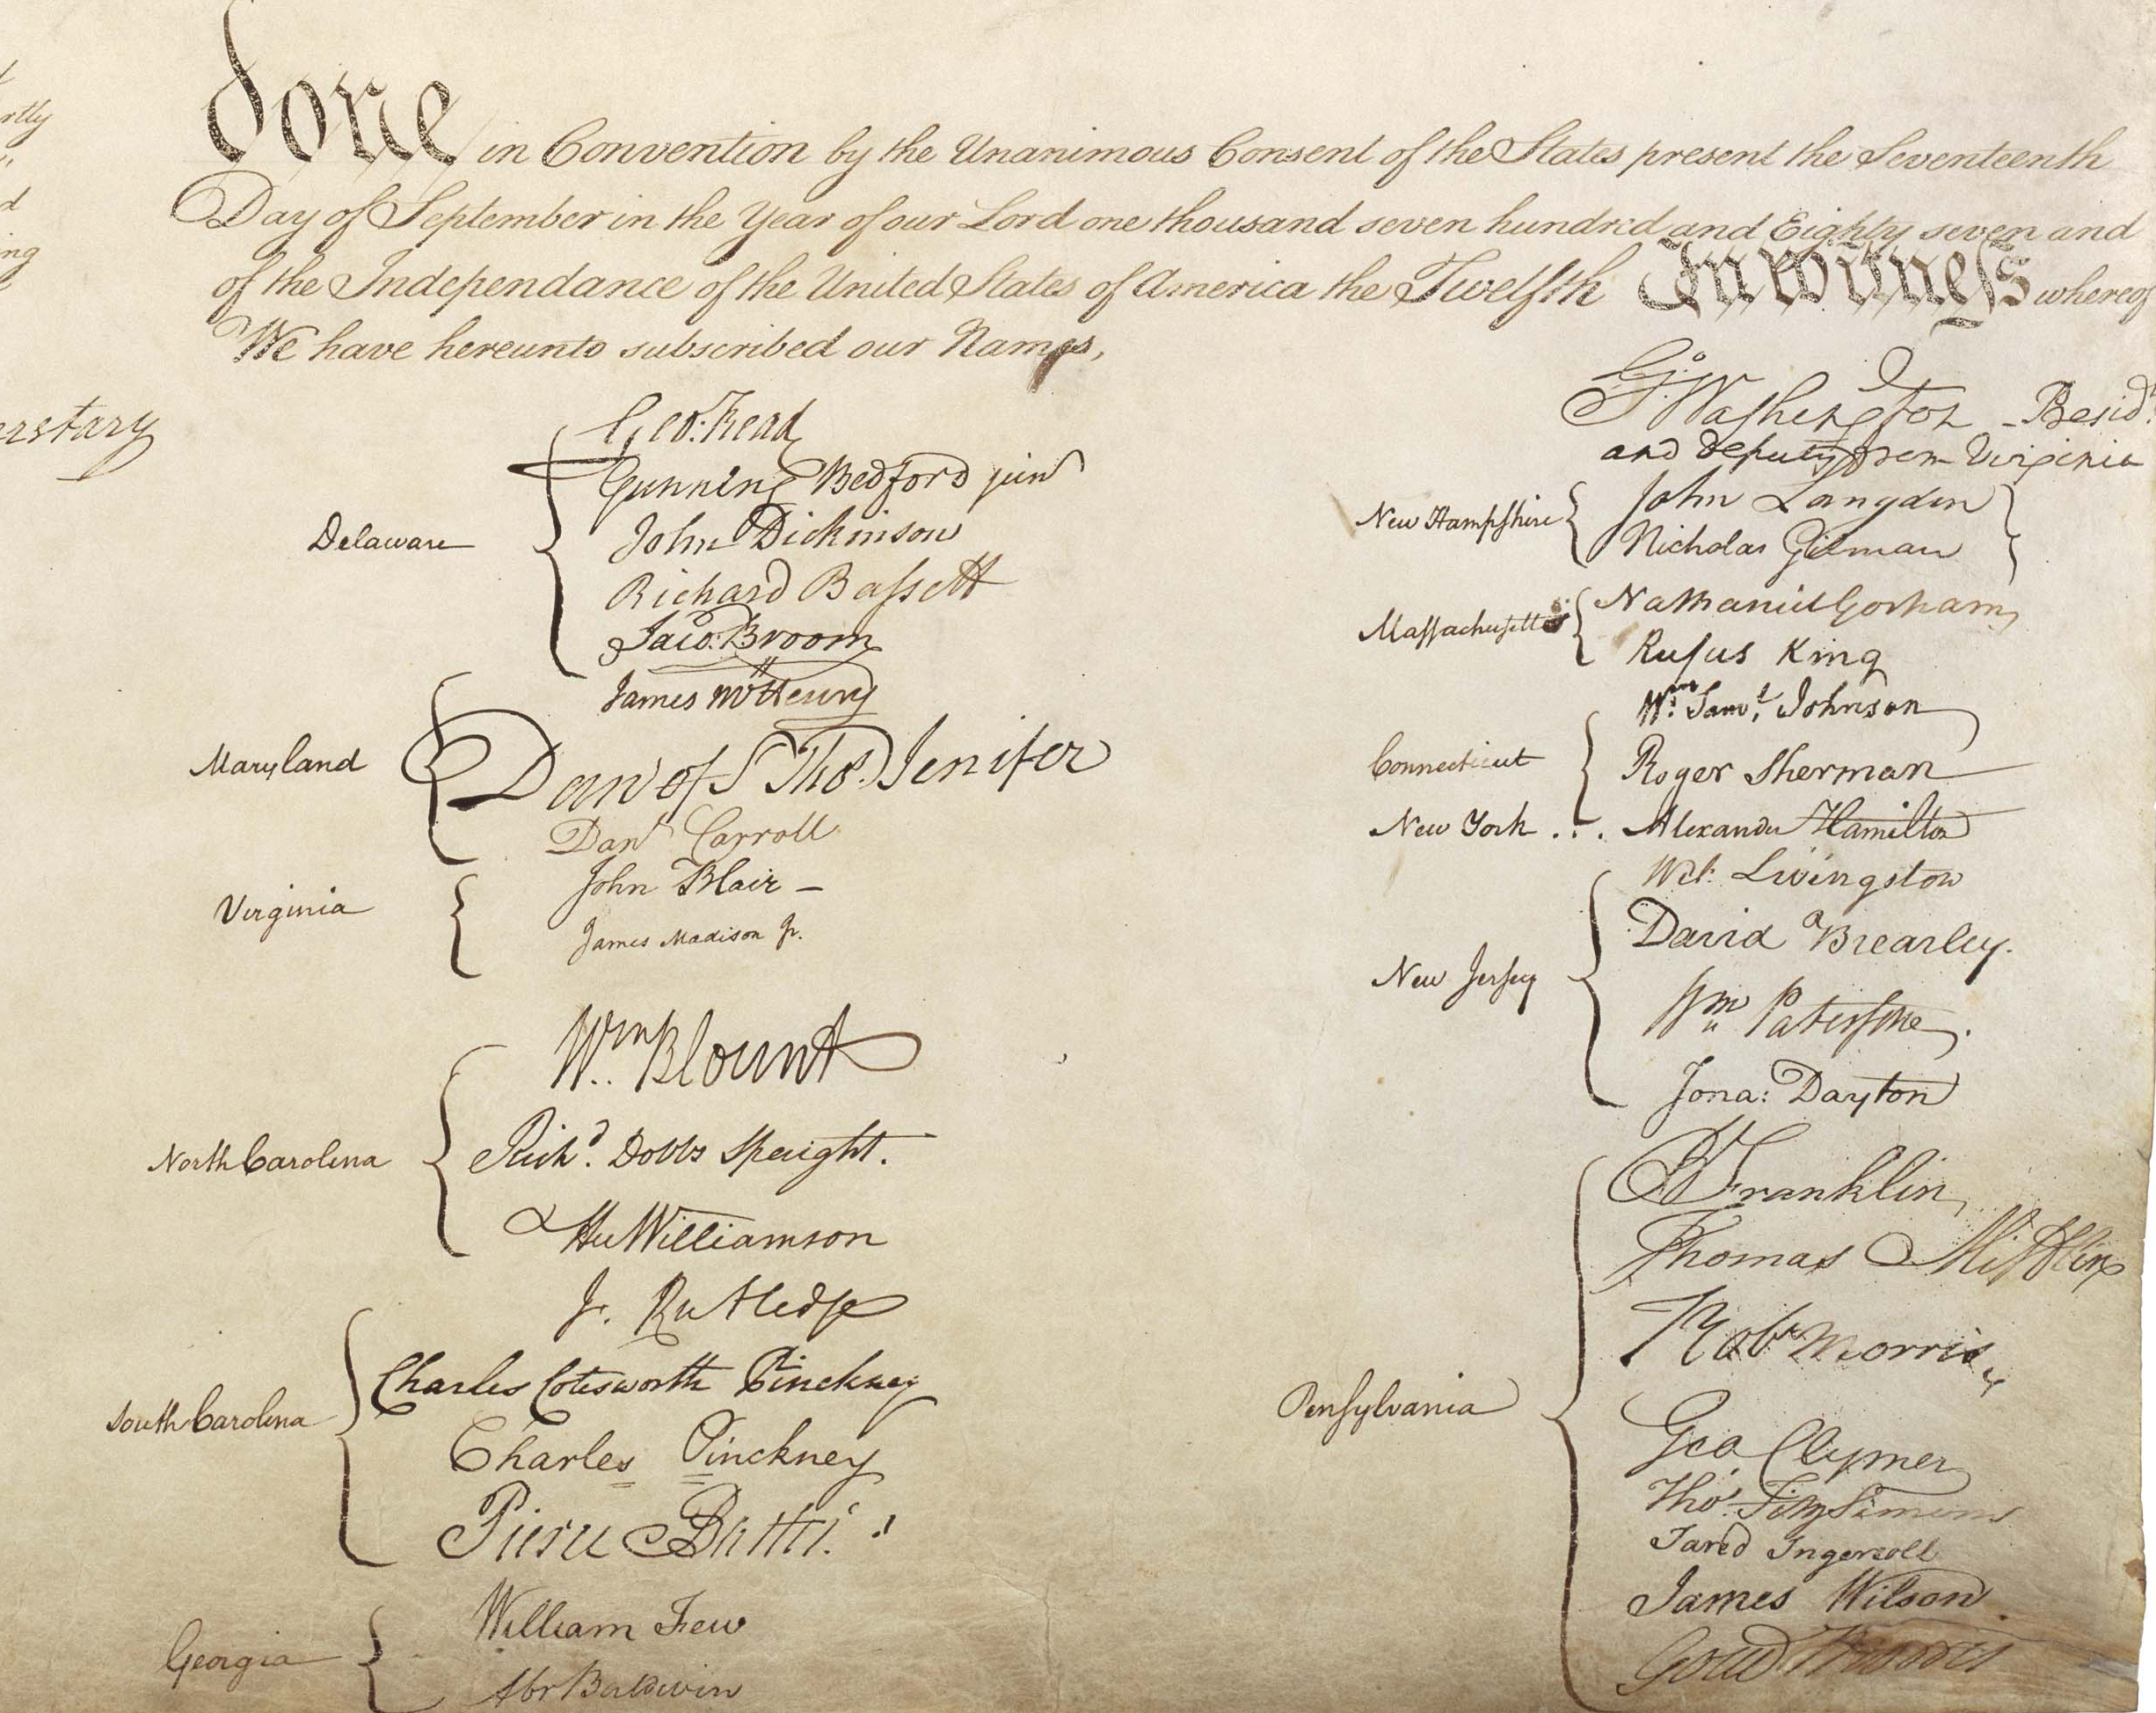 Signatures on the United States Constitution.